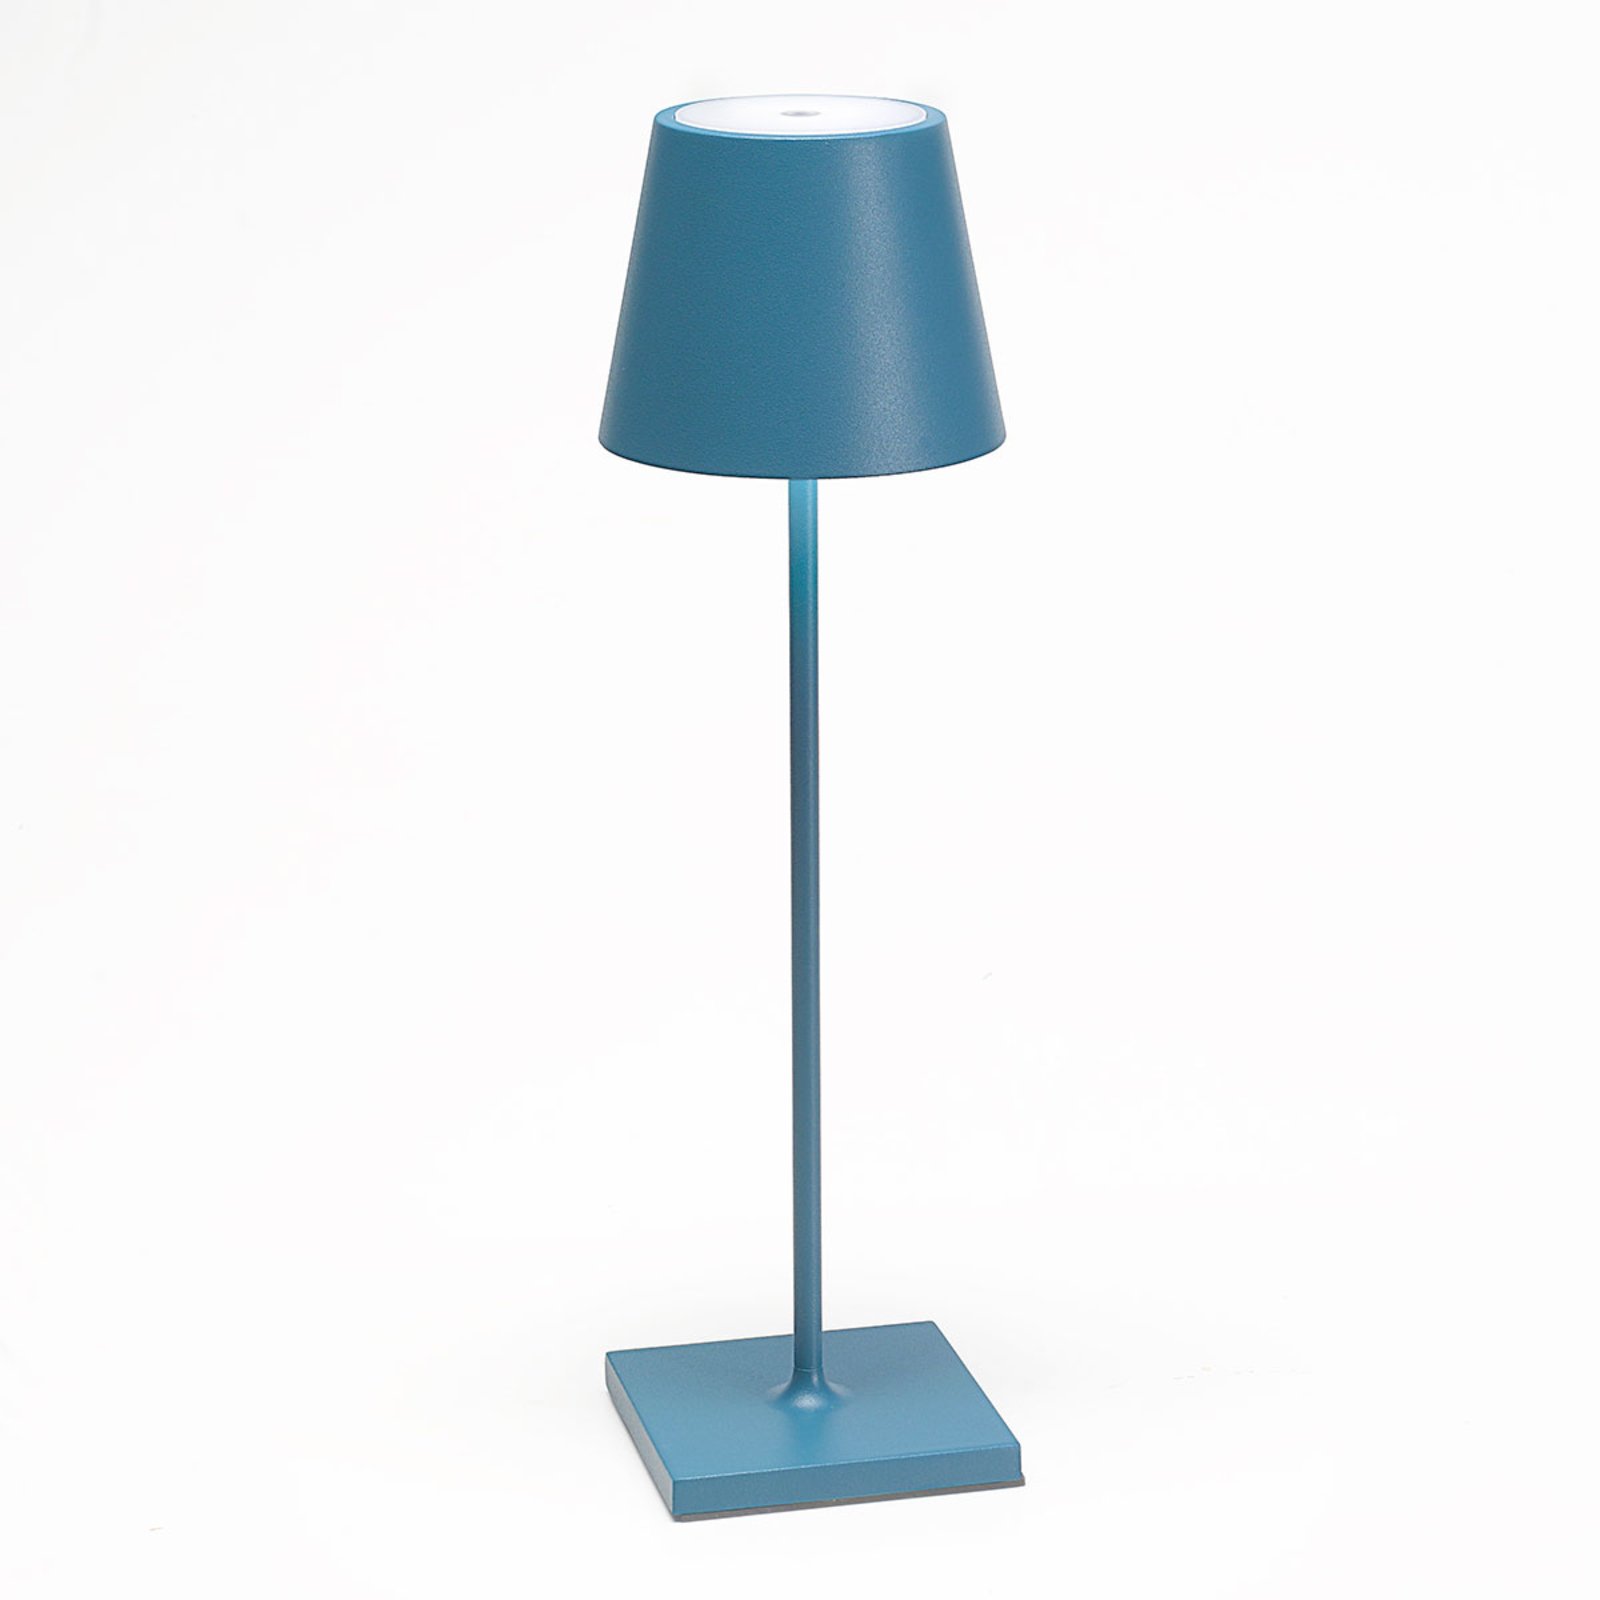 Zafferano Poldina Lampada LED da tavolo, batteria ricaricabile, opaca, blu